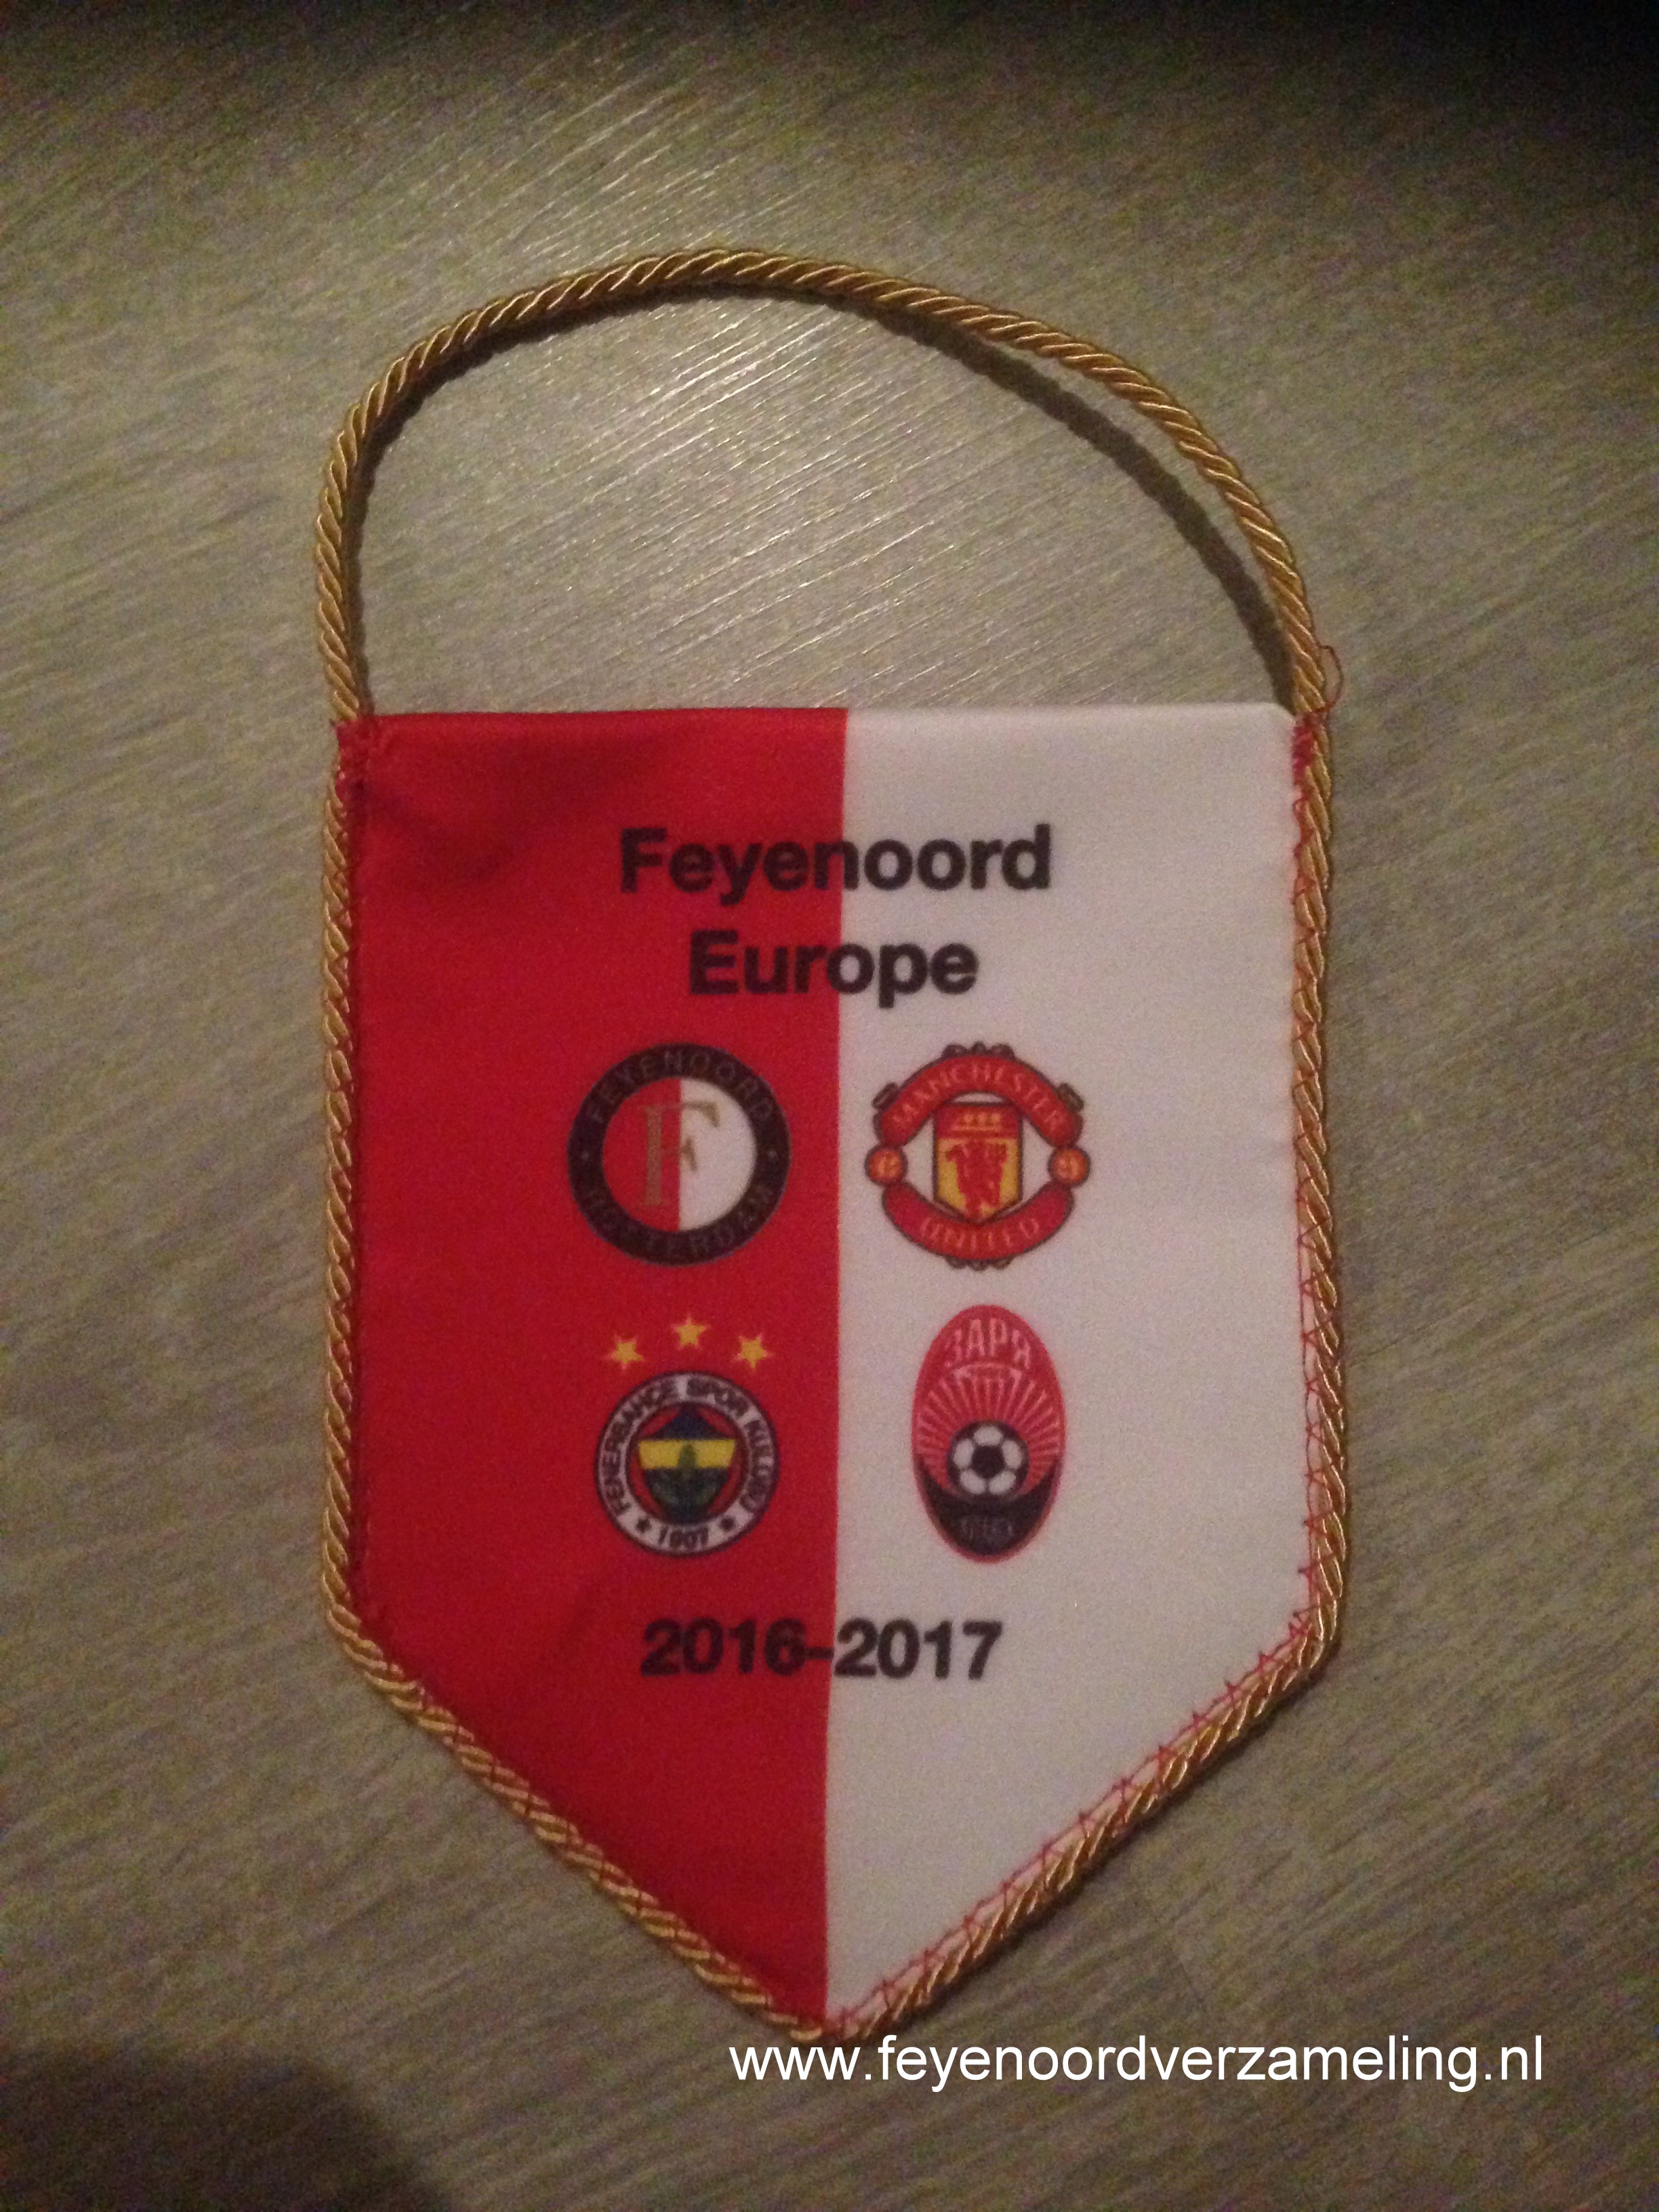 Feyenoord Europe 2016-2017